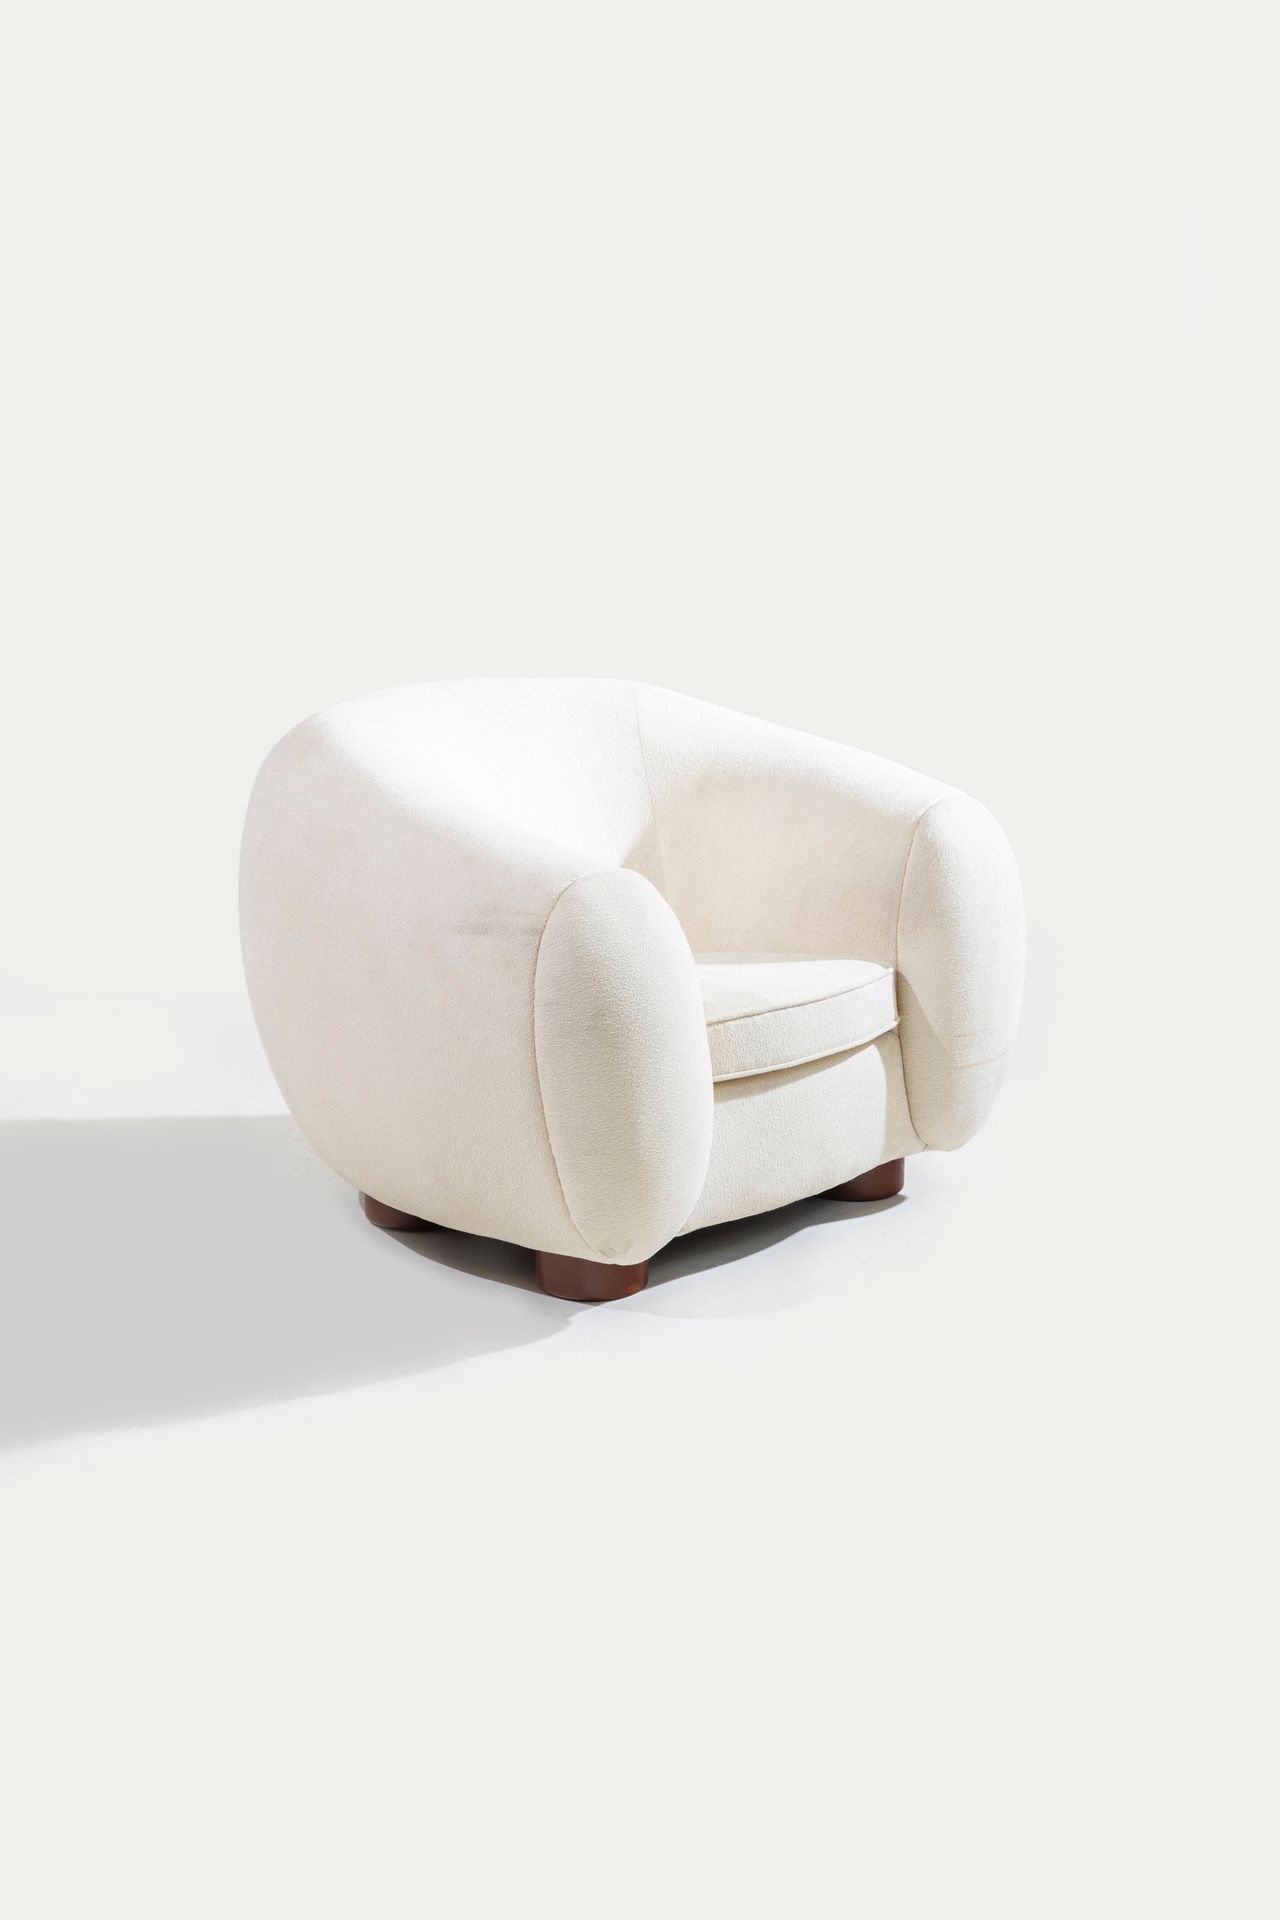 JEAN ROYERE (DISEGNO DI) 扶手椅。镟木，软垫织物。20世纪。
厘米75x95x95
J.罗耶尔的扶手椅（设计）。



状况良好，木质部&hellip;